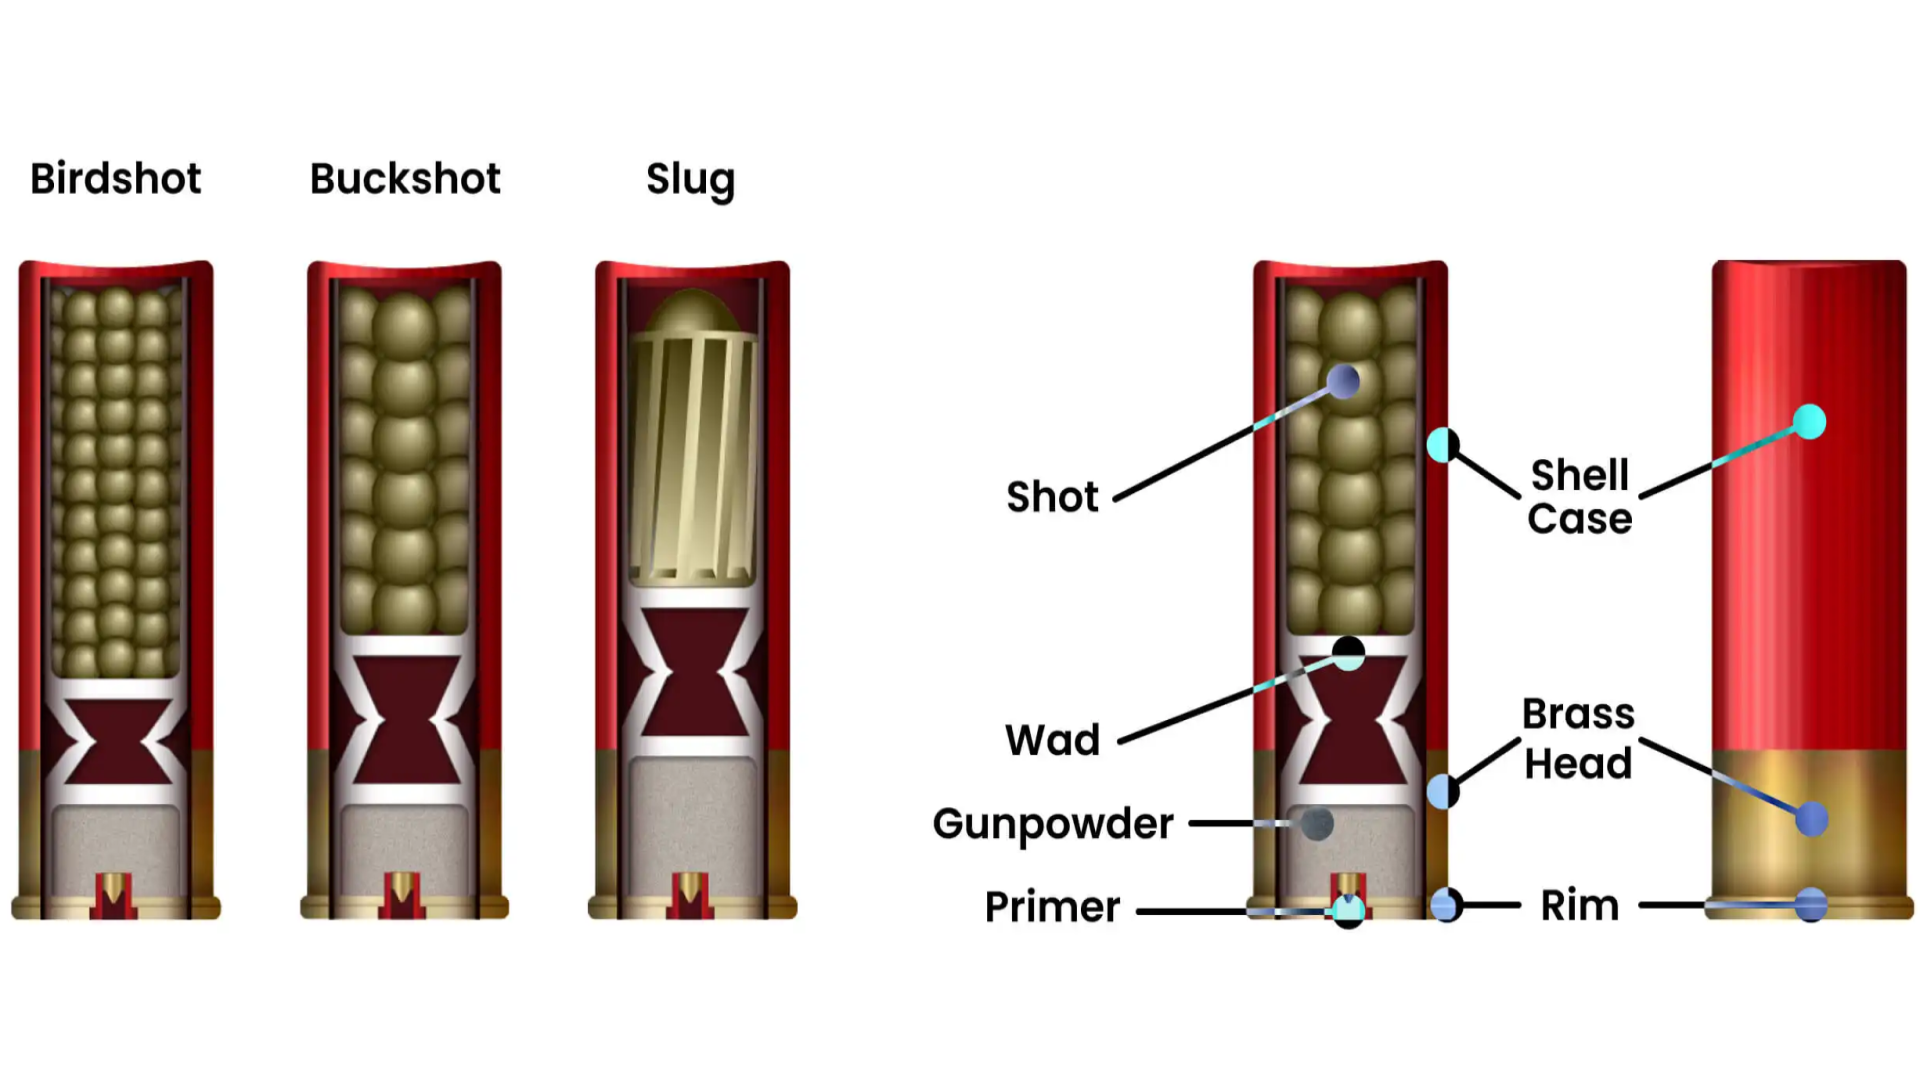 Shotgun Shells Explained - Types Of Ammo (Birdshot, Buckshot, Slugs)